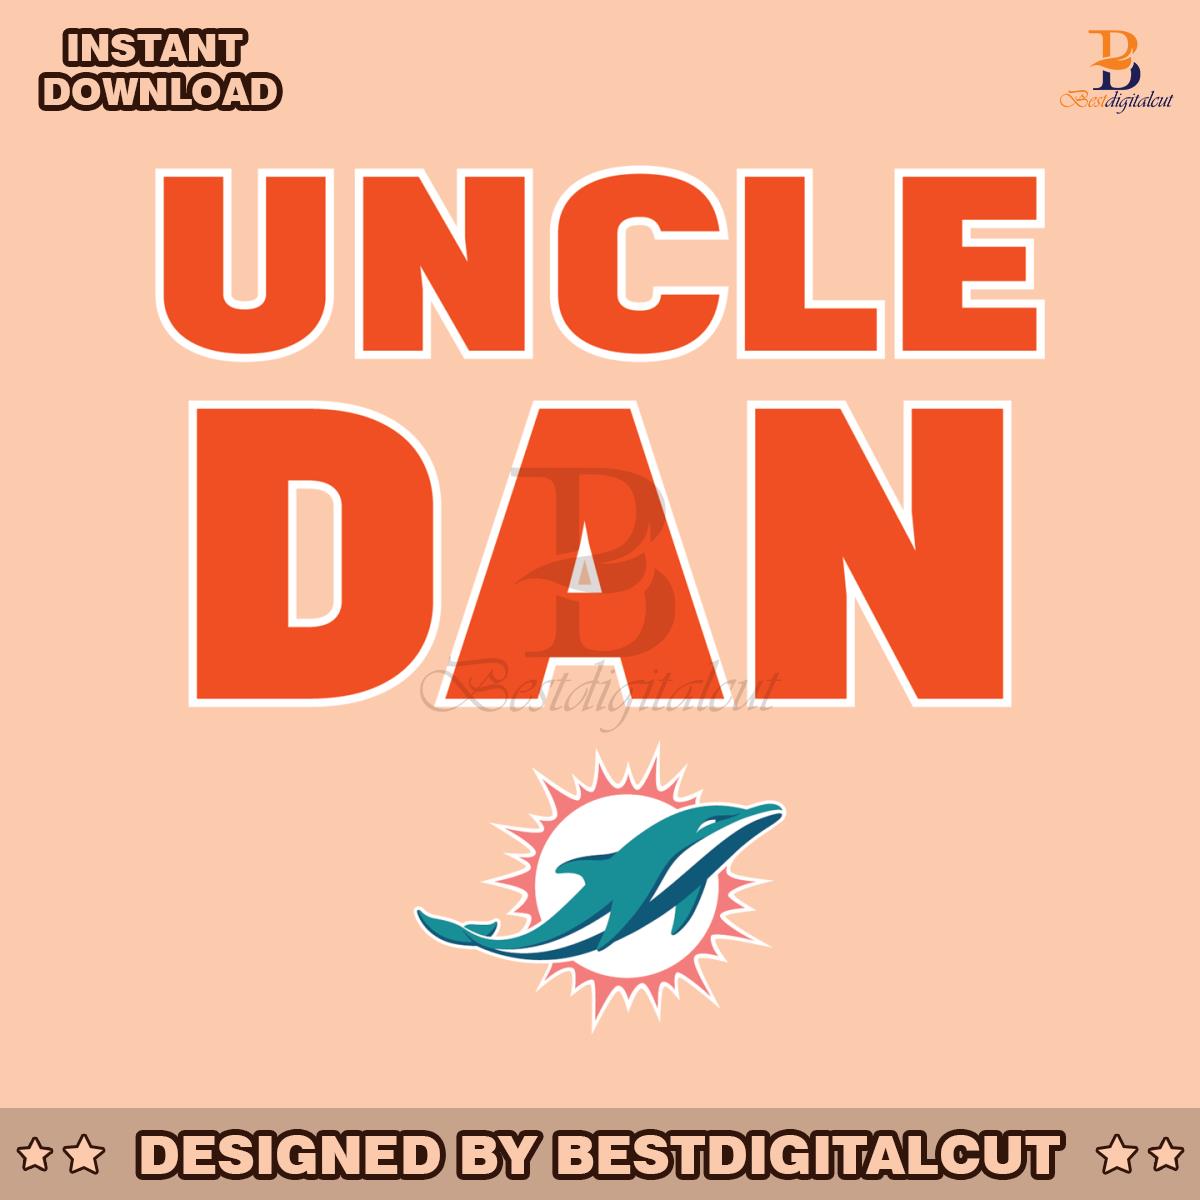 miami-dolphins-uncle-dan-svg